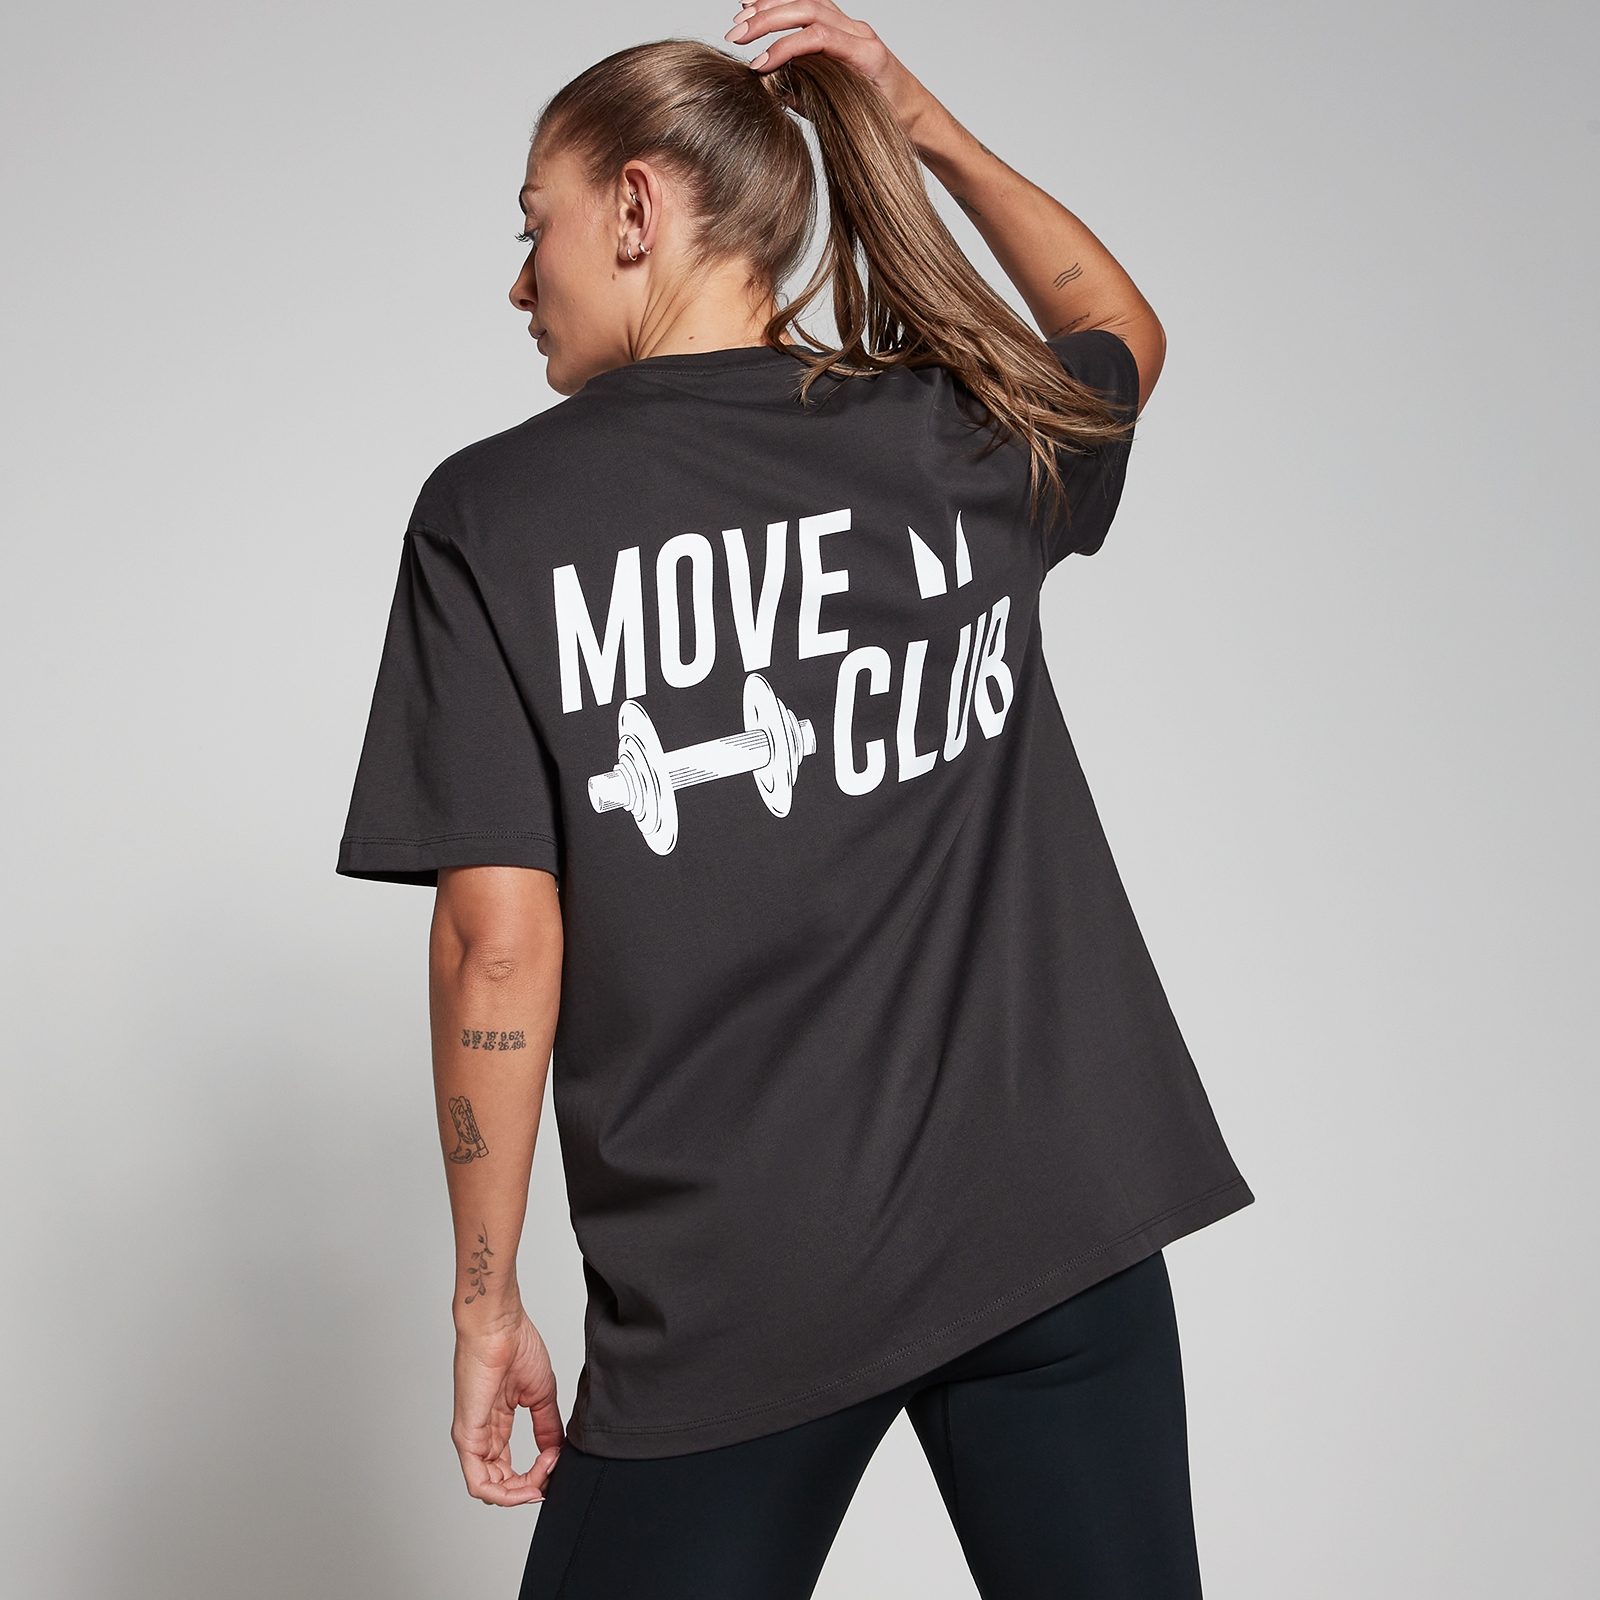 Camiseta extragrande Move Club de MP - Negro lavado - XXL-XXXL